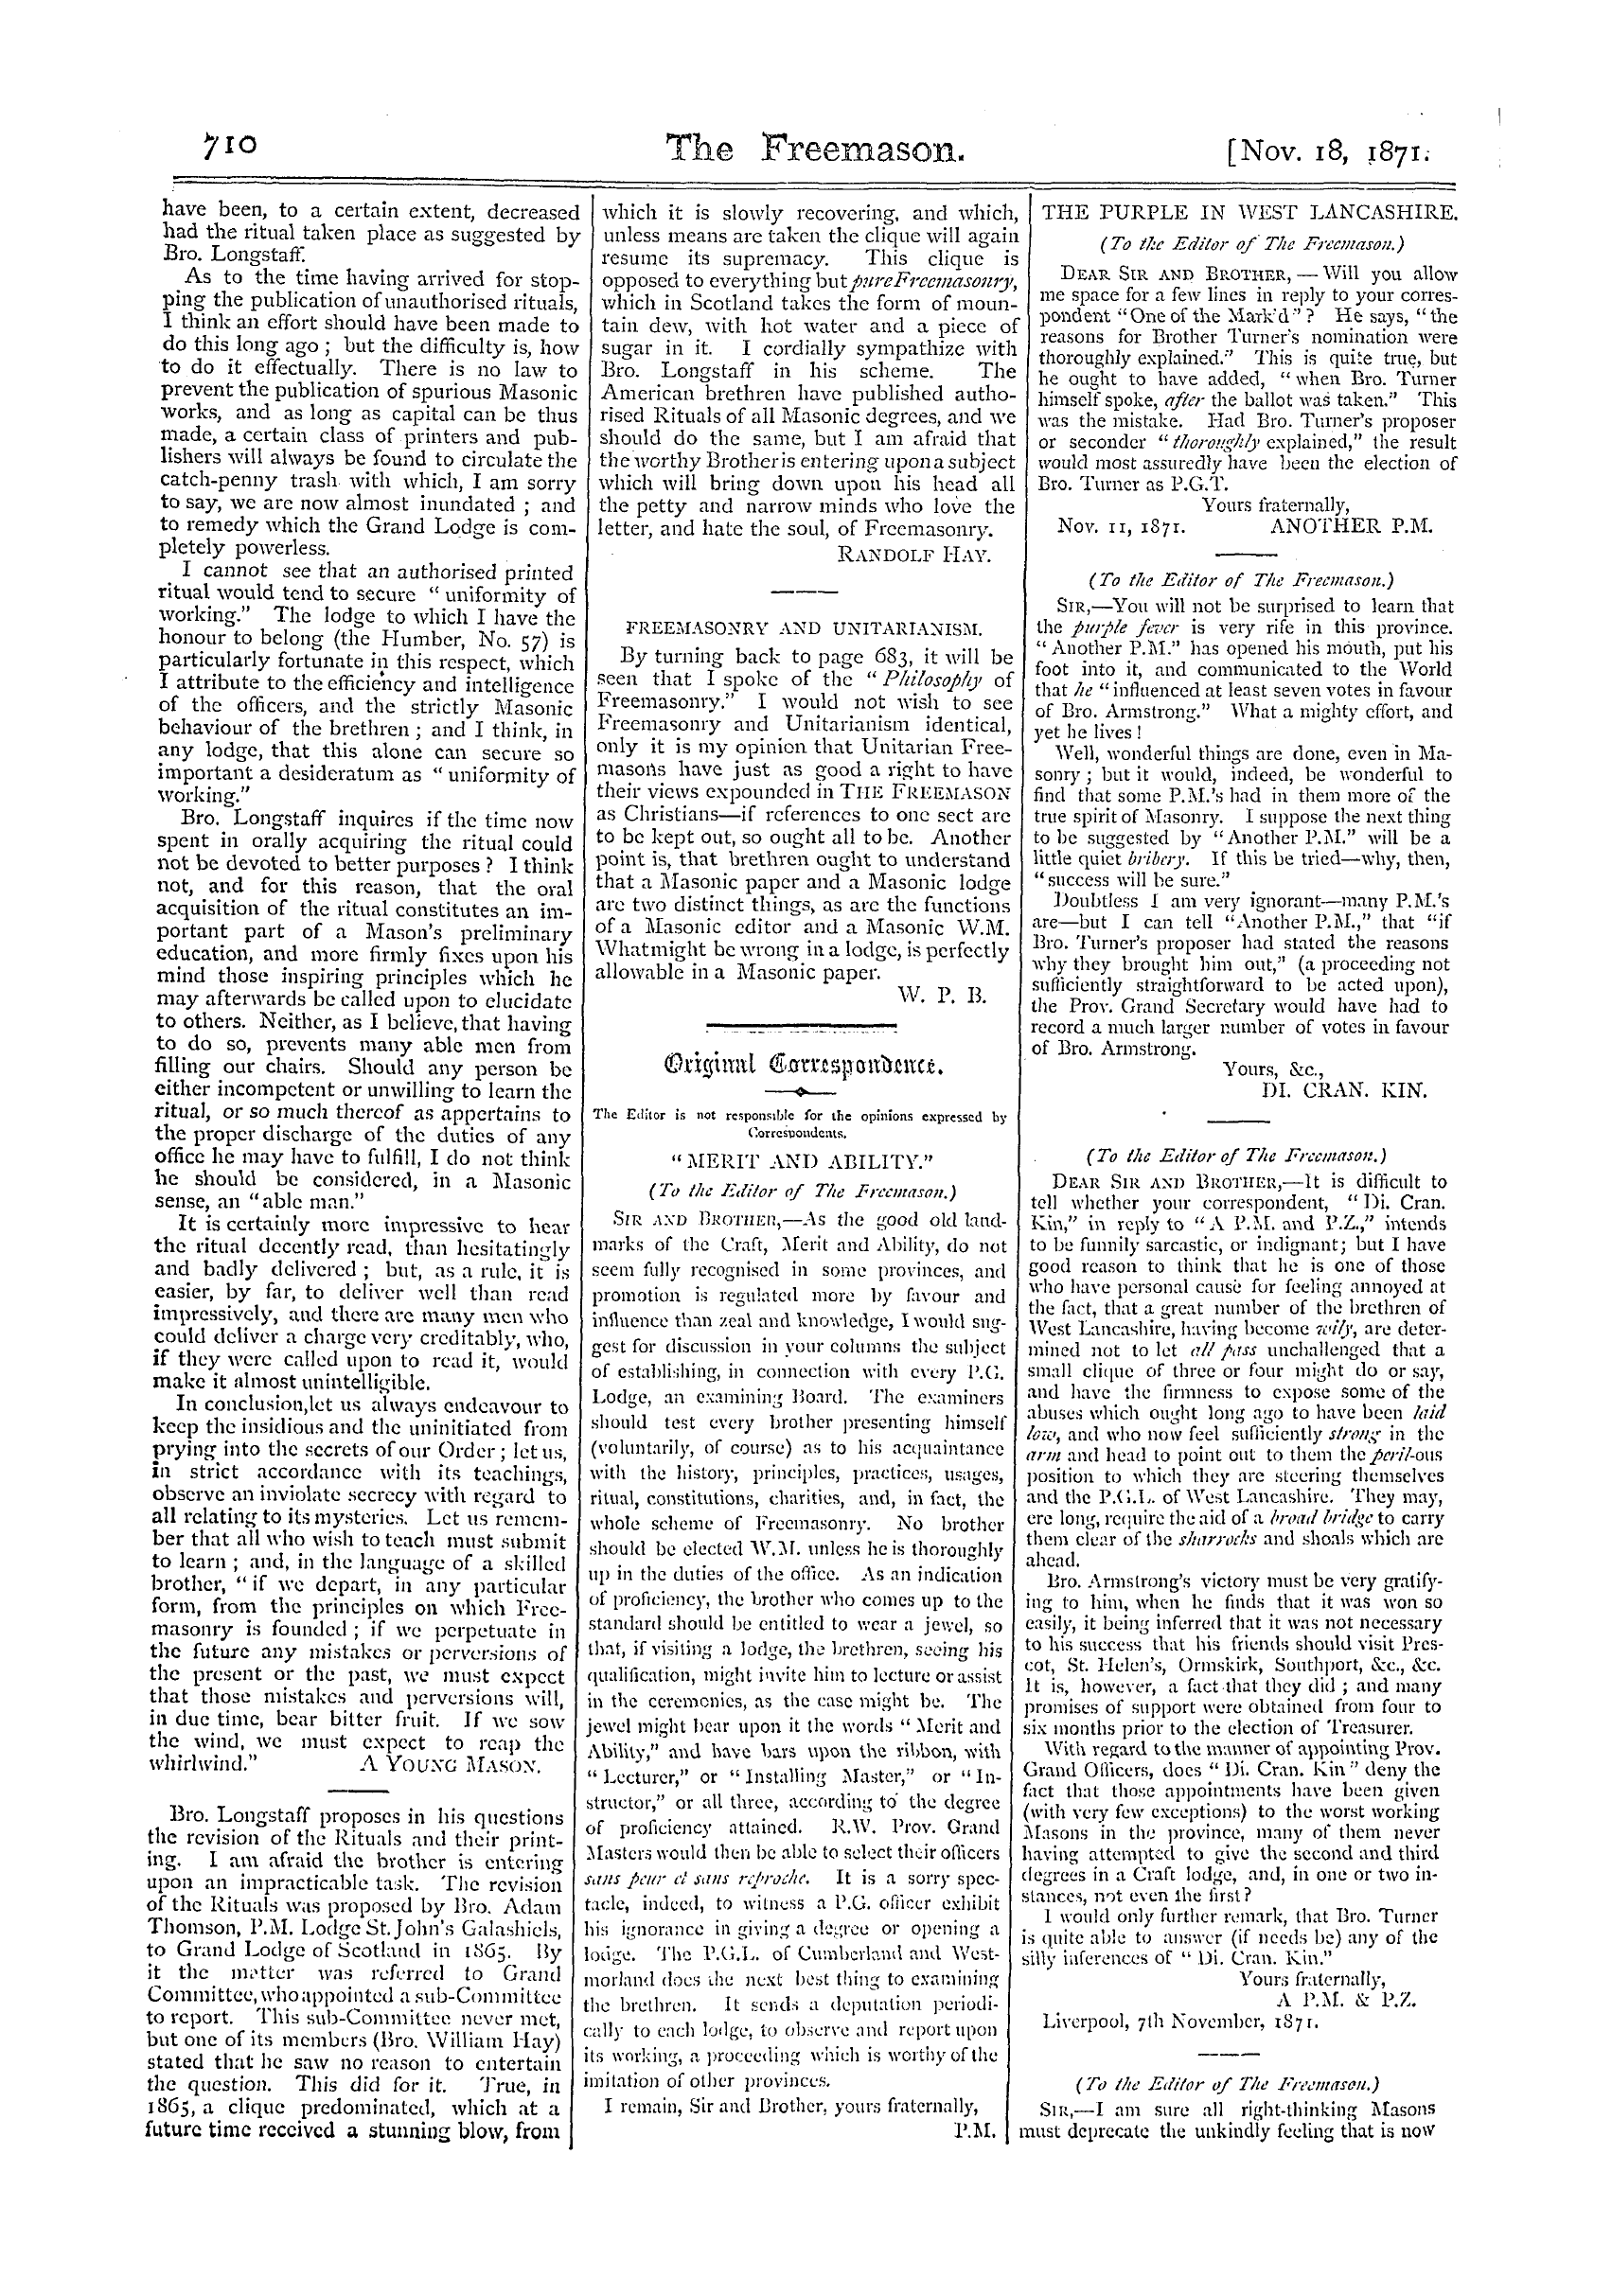 The Freemason: 1871-11-18: 8